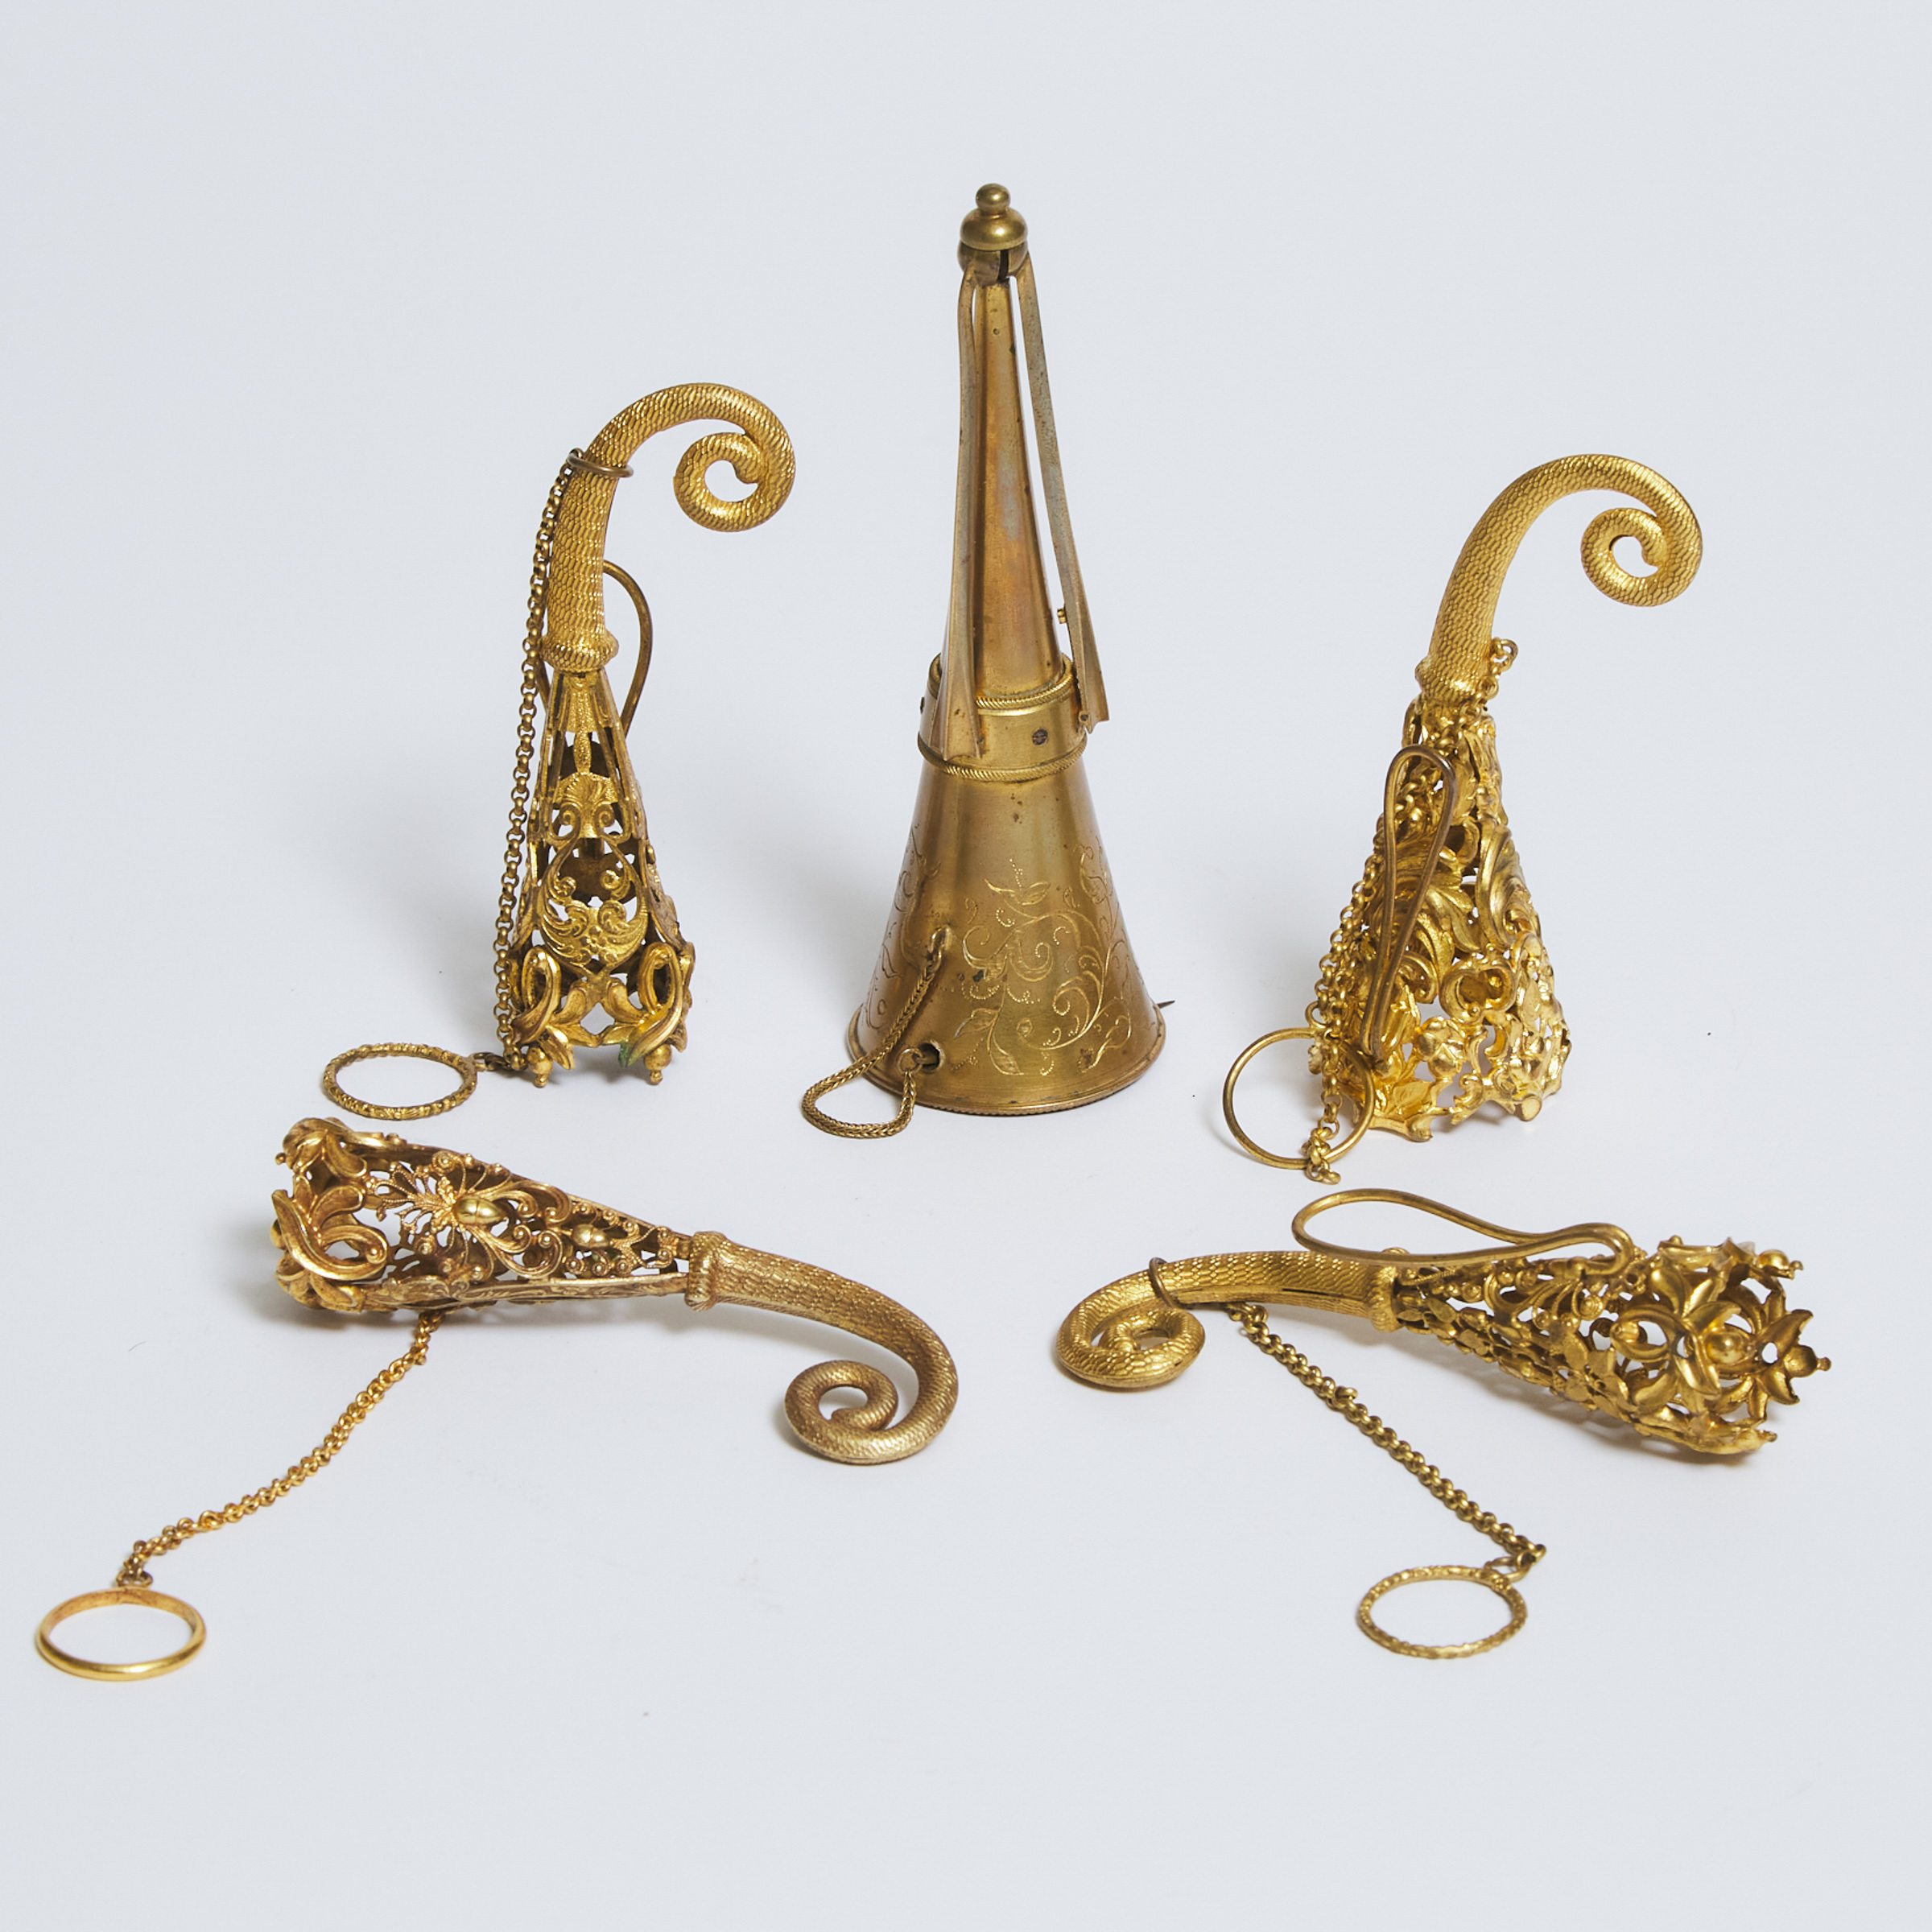 Five Victorian Gilt Metal Posy Holders, 19th century